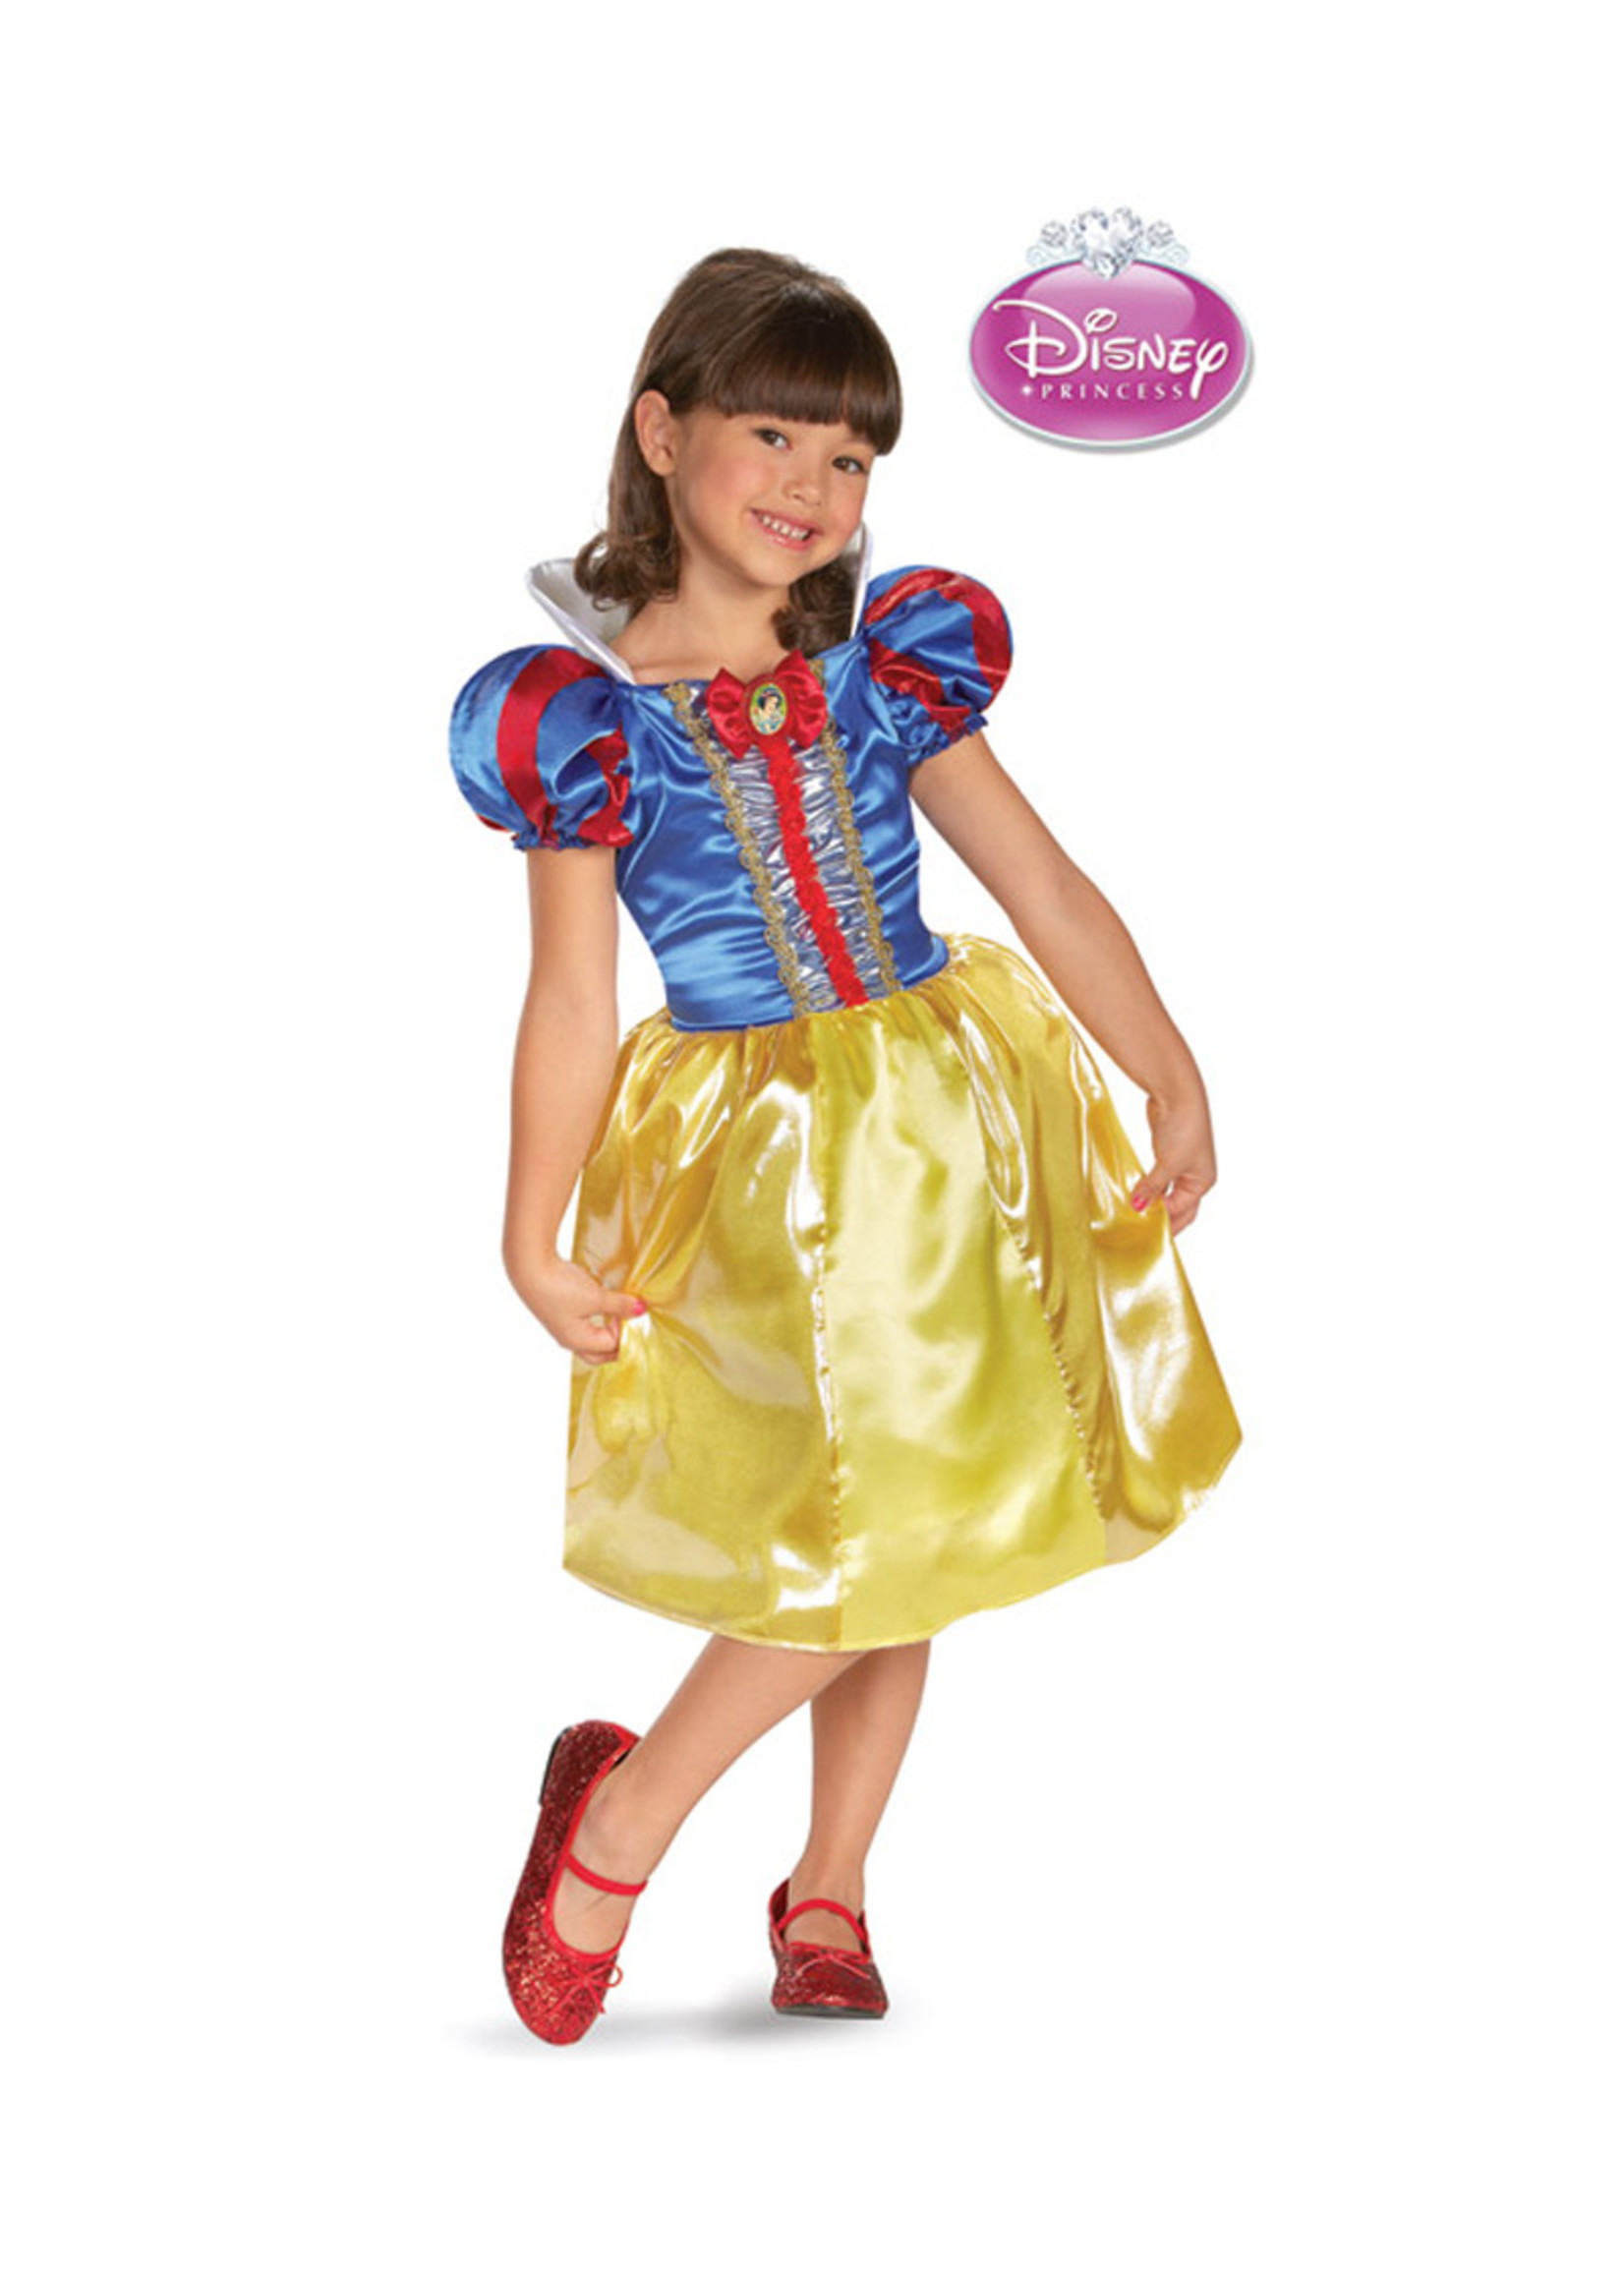 Snow White Sparkle Classic Costume - Girls